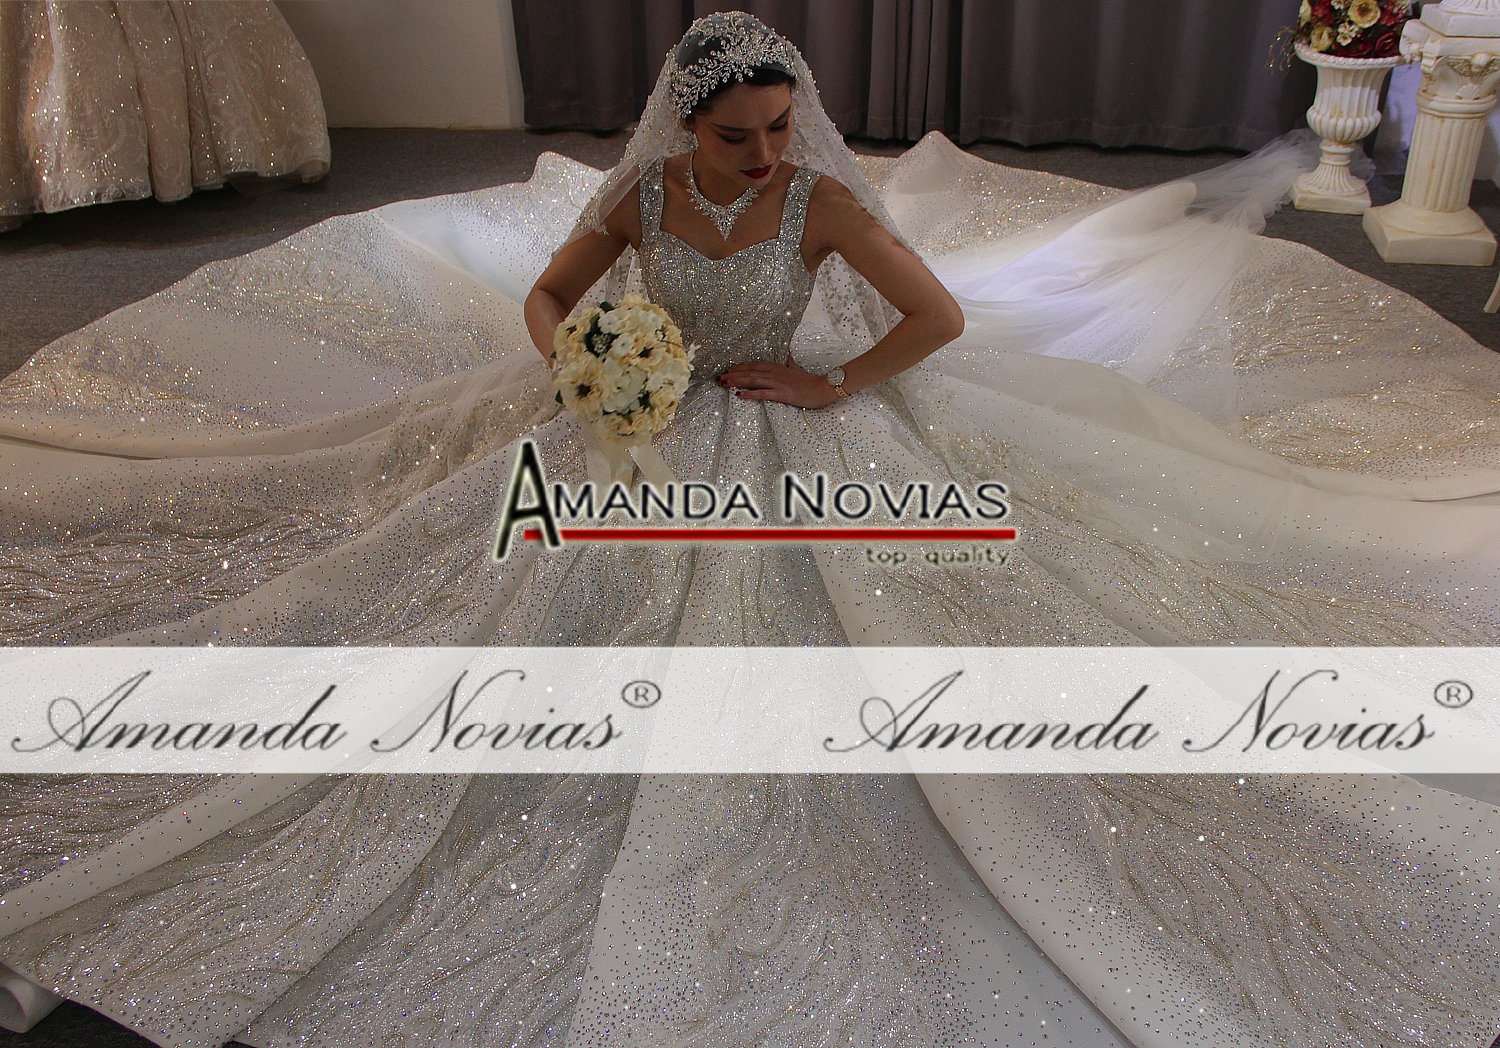 Dubai Luxury Heavy Beading wedding dress sparkling bridal dress 2020 Amanda Novias brand real work